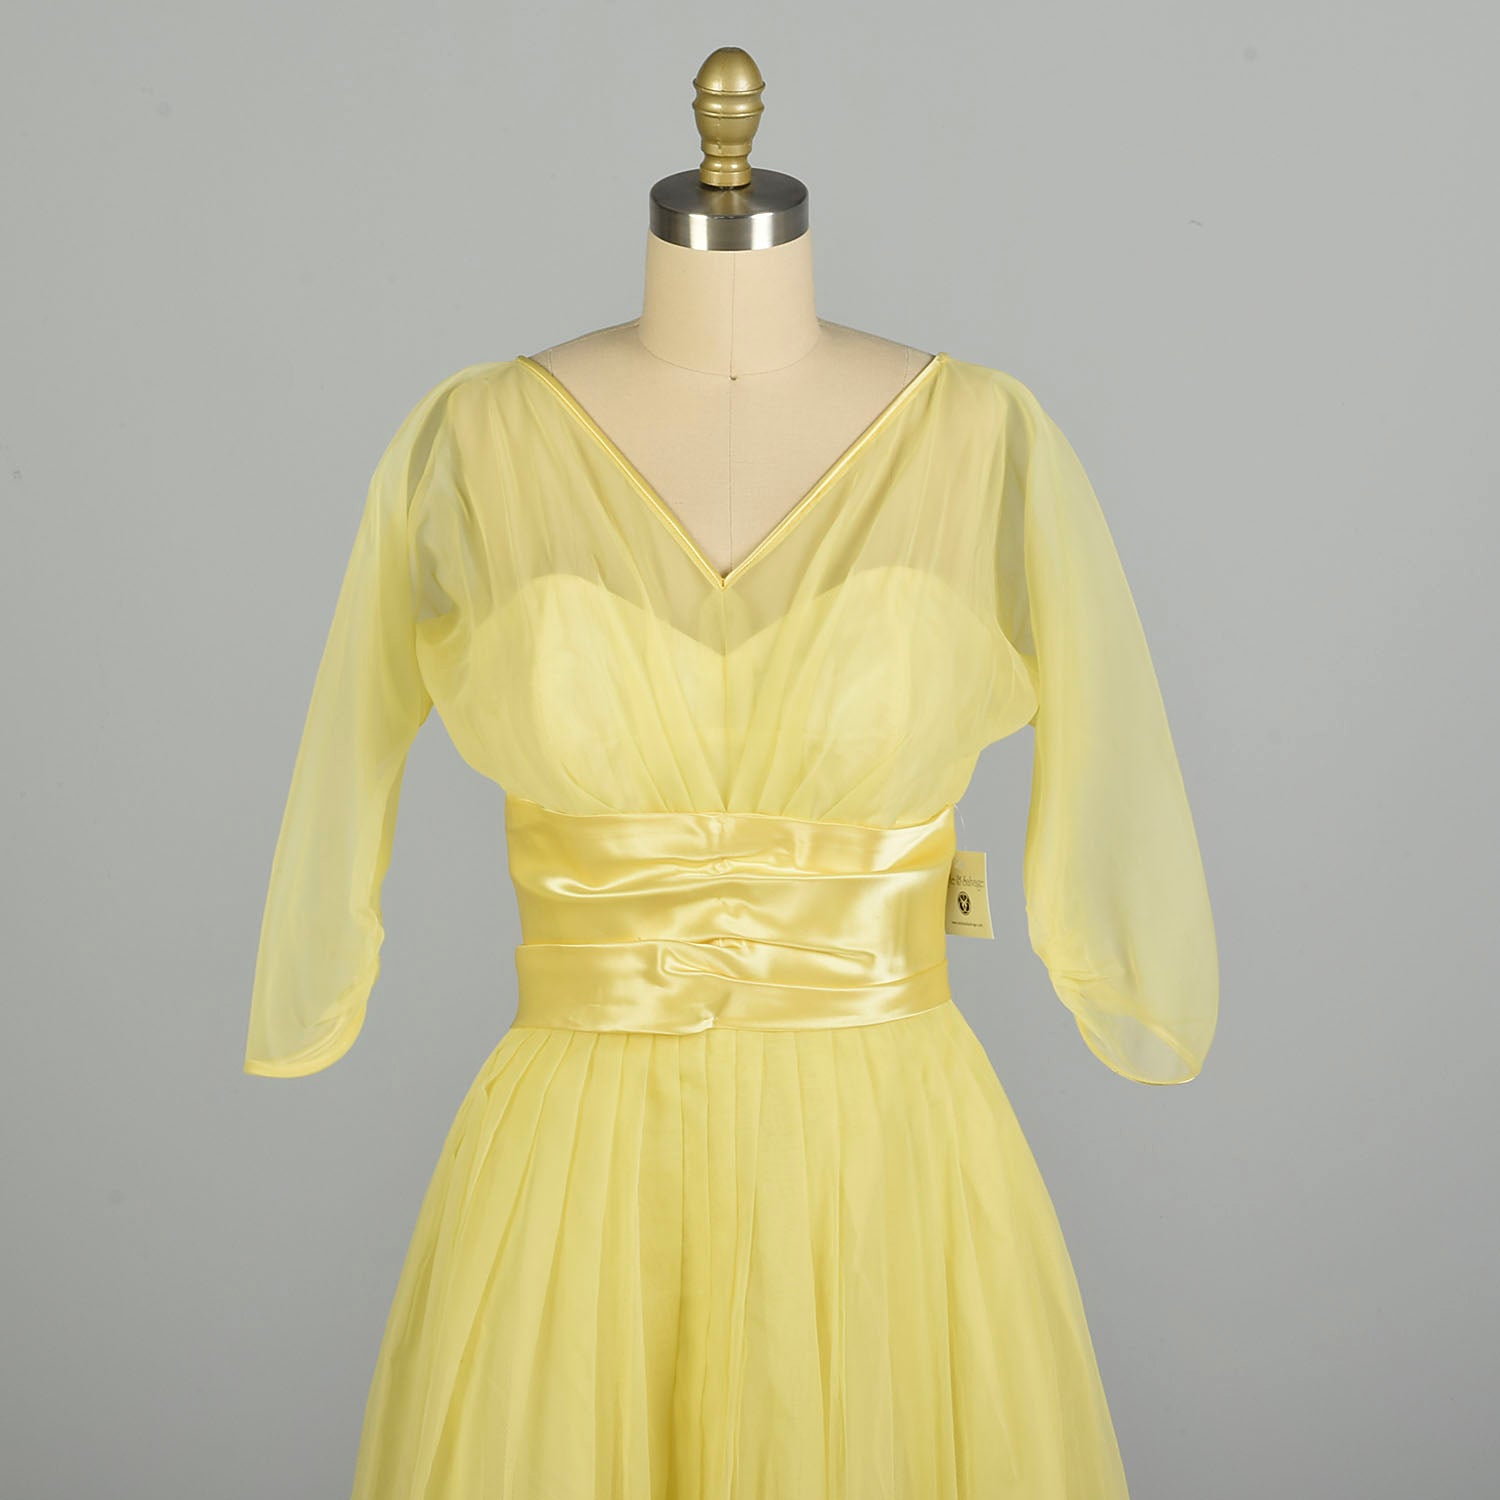 Medium 1950s Lemon Yellow Semi-Sheer Cummerbund Evening Party Prom Dress